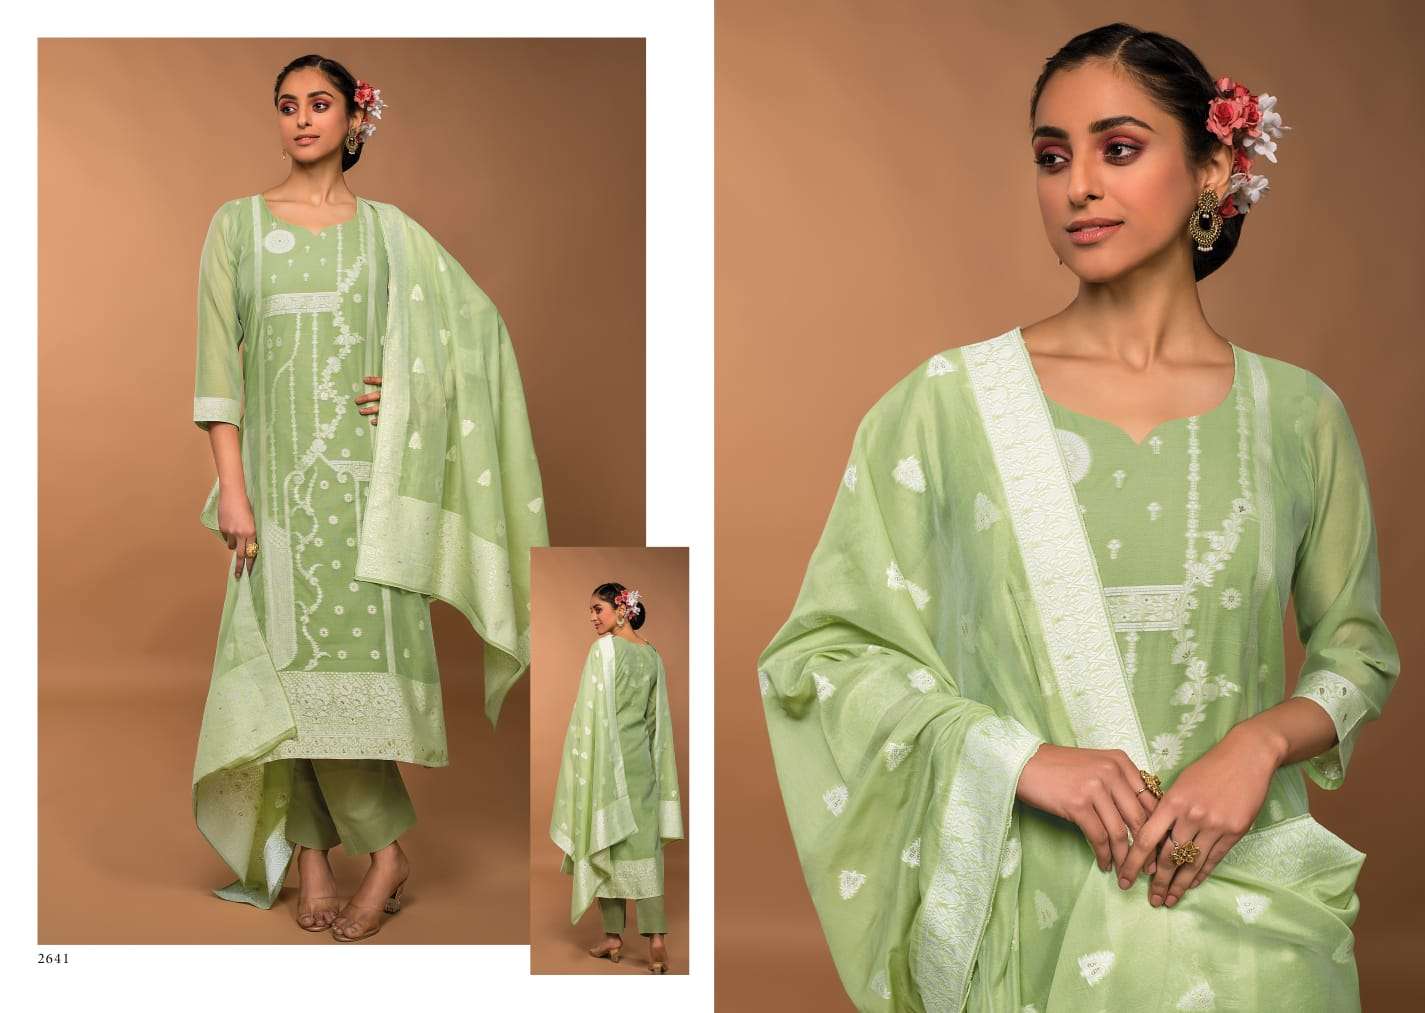 rivaa exports bindia vol-3 2638-2644 series party wear salwar suits catalogue wholesale price surat